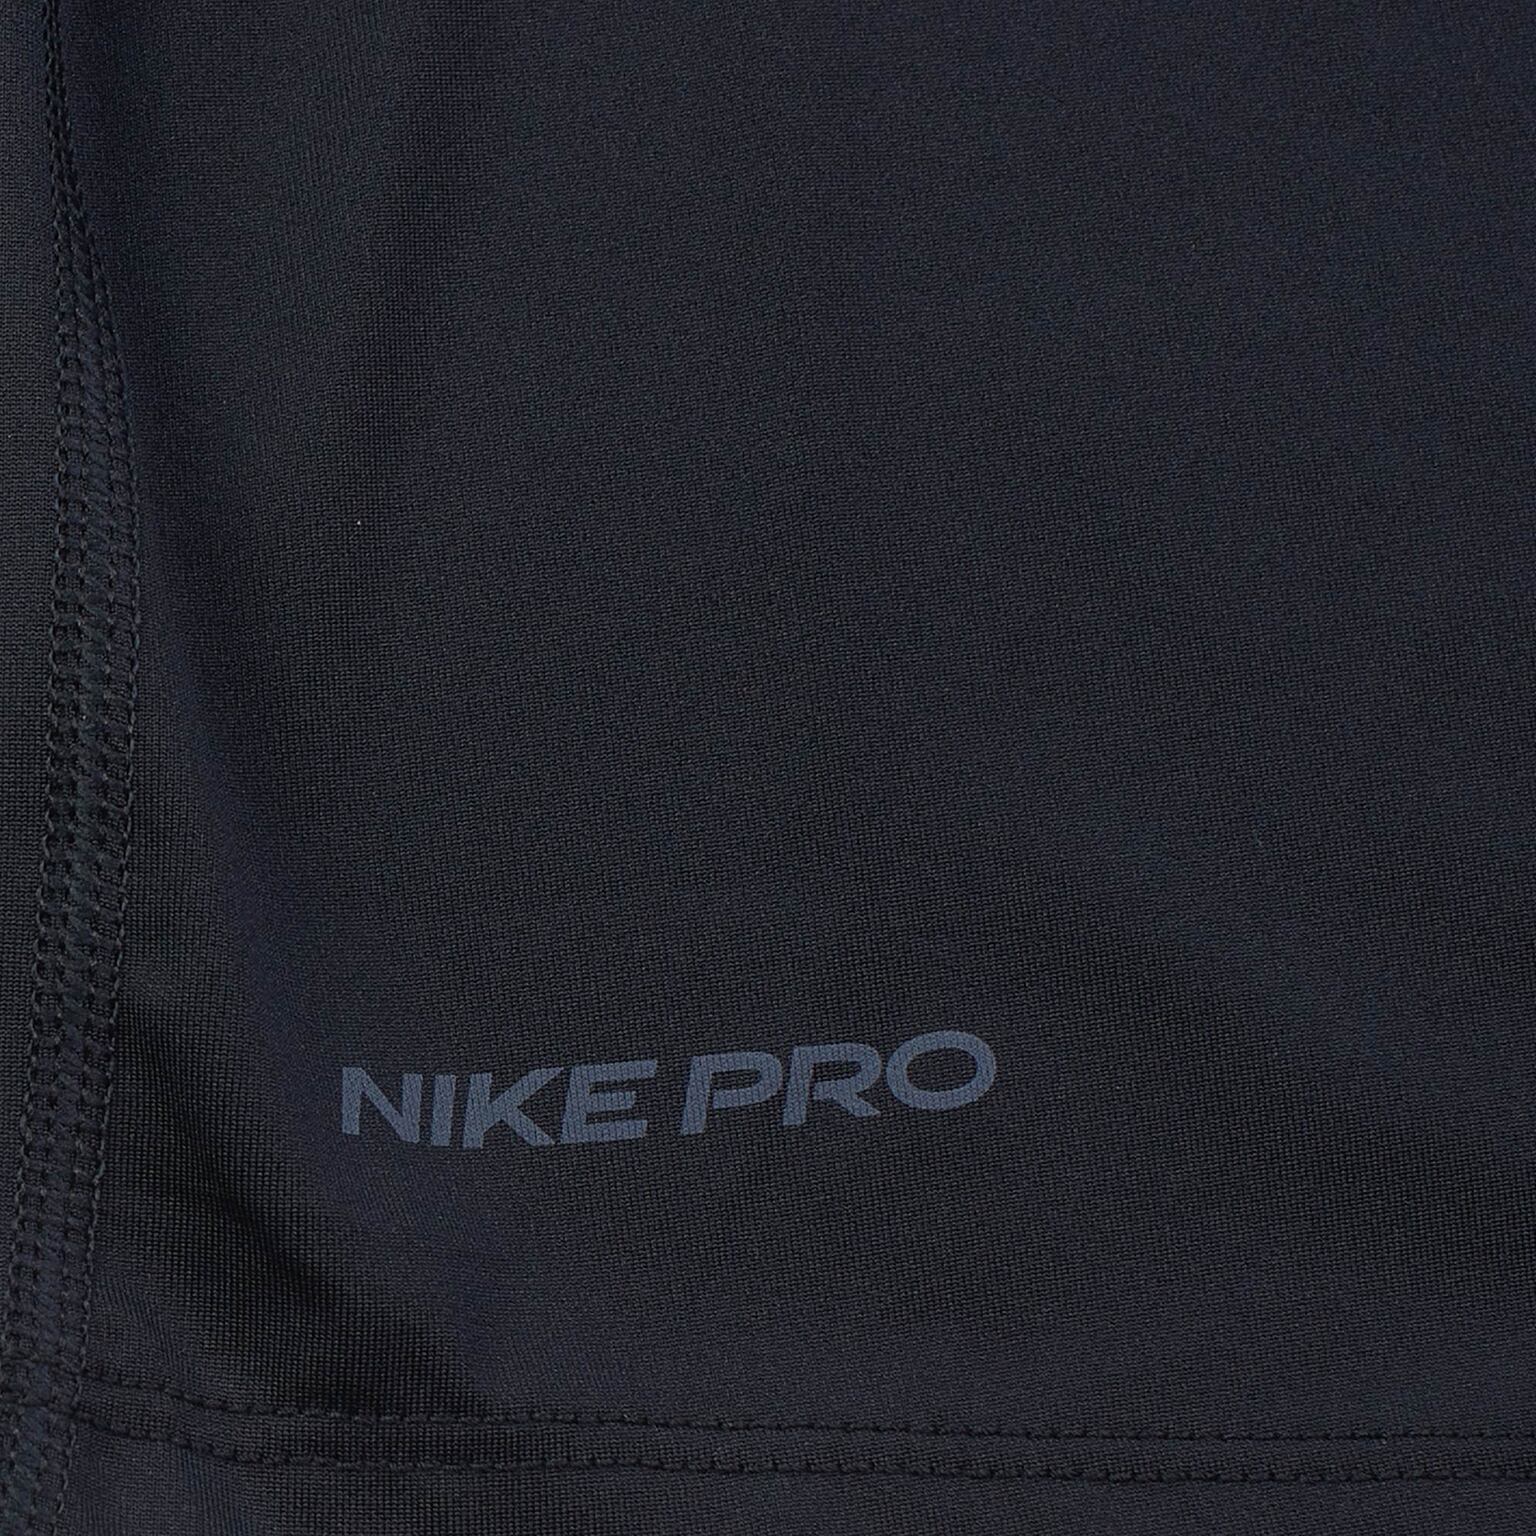 Белье футболка подростковая Nike Training Top CJ7711-010